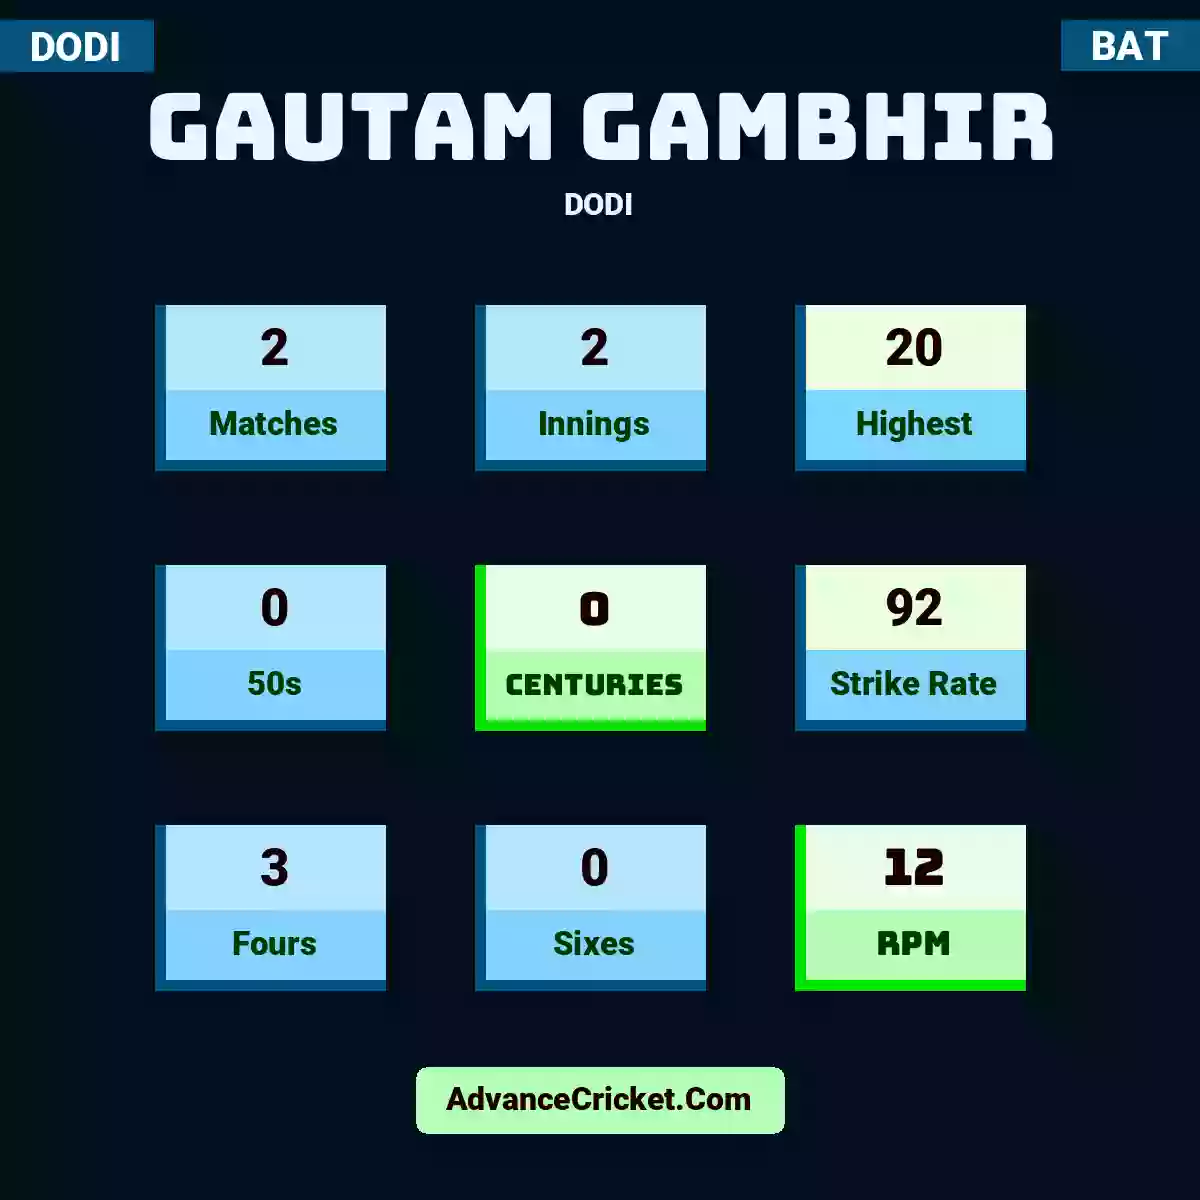 Gautam Gambhir DODI , Gautam Gambhir played 2 matches, scored 20 runs as highest, 0 half-centuries, and 0 centuries, with a strike rate of 92. G.Gambhir hit 3 fours and 0 sixes, with an RPM of 12.